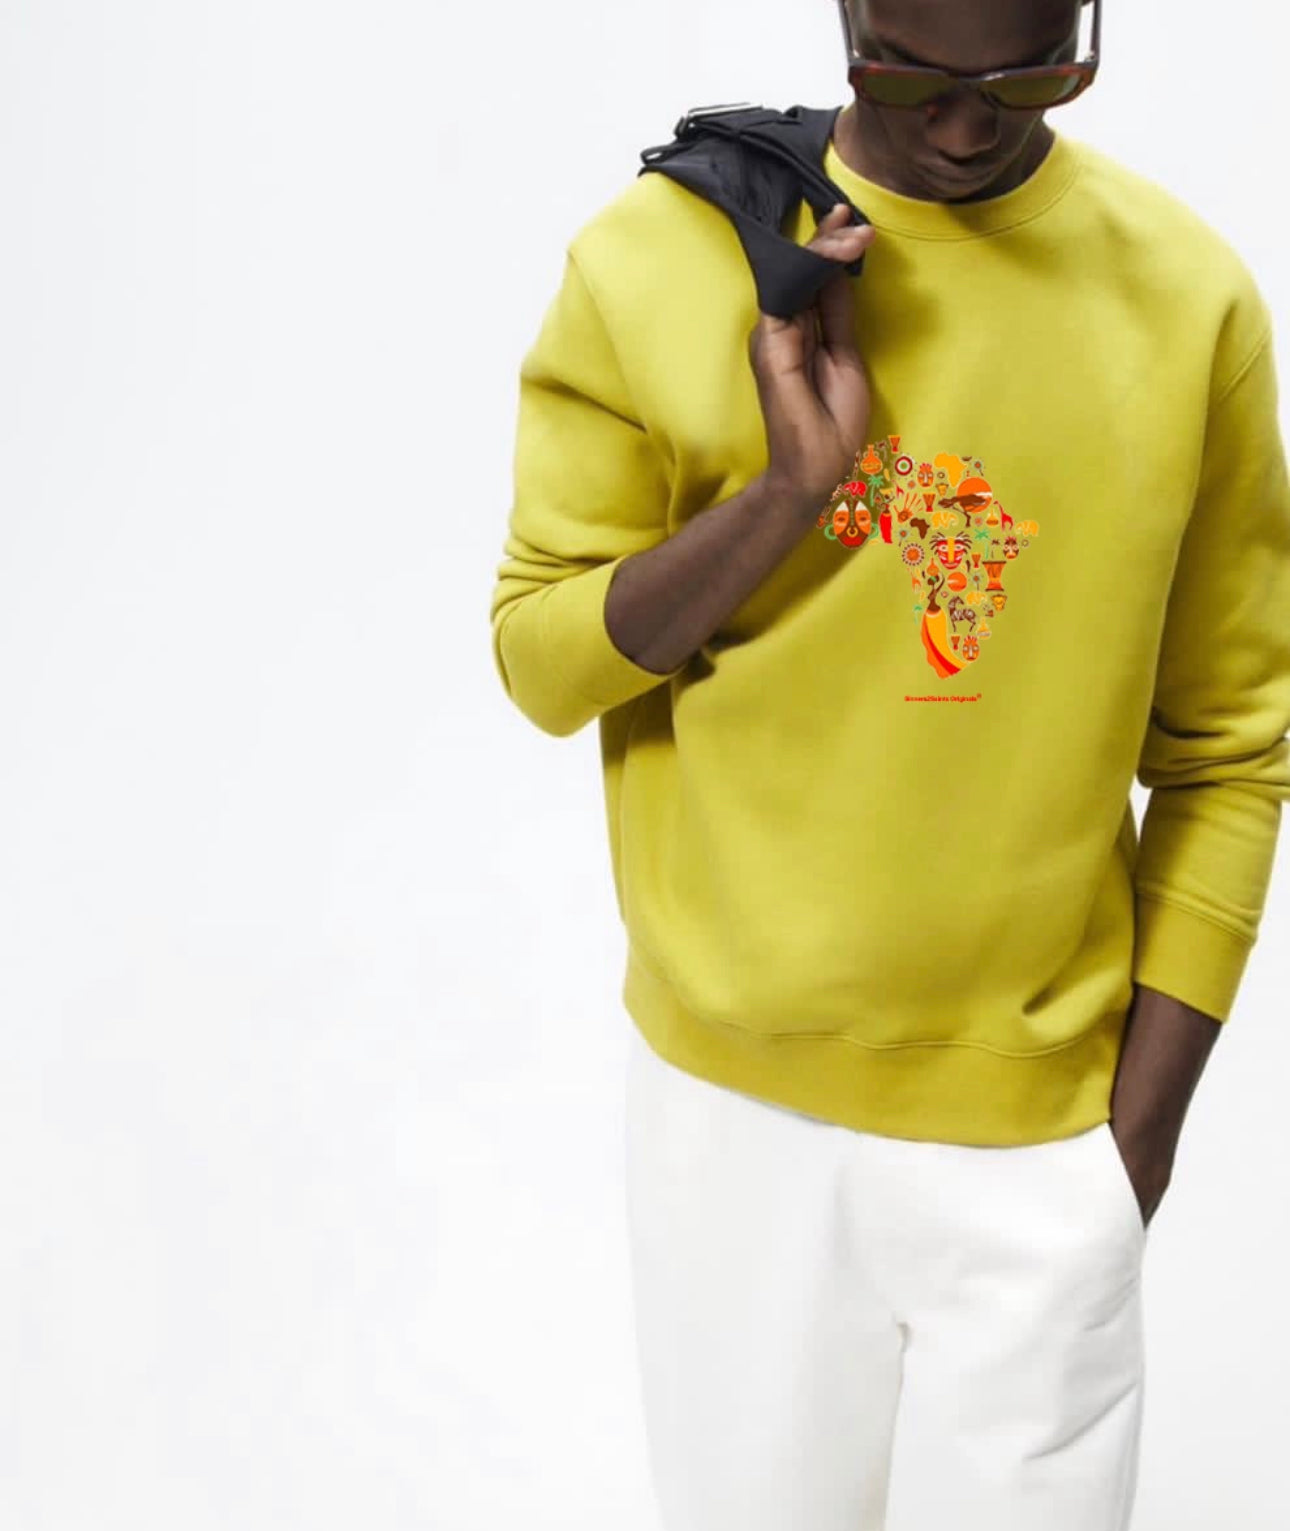 Origins Crewneck Sweatshirt - African Inspired Theme **Limited Release - Sinners2Saints